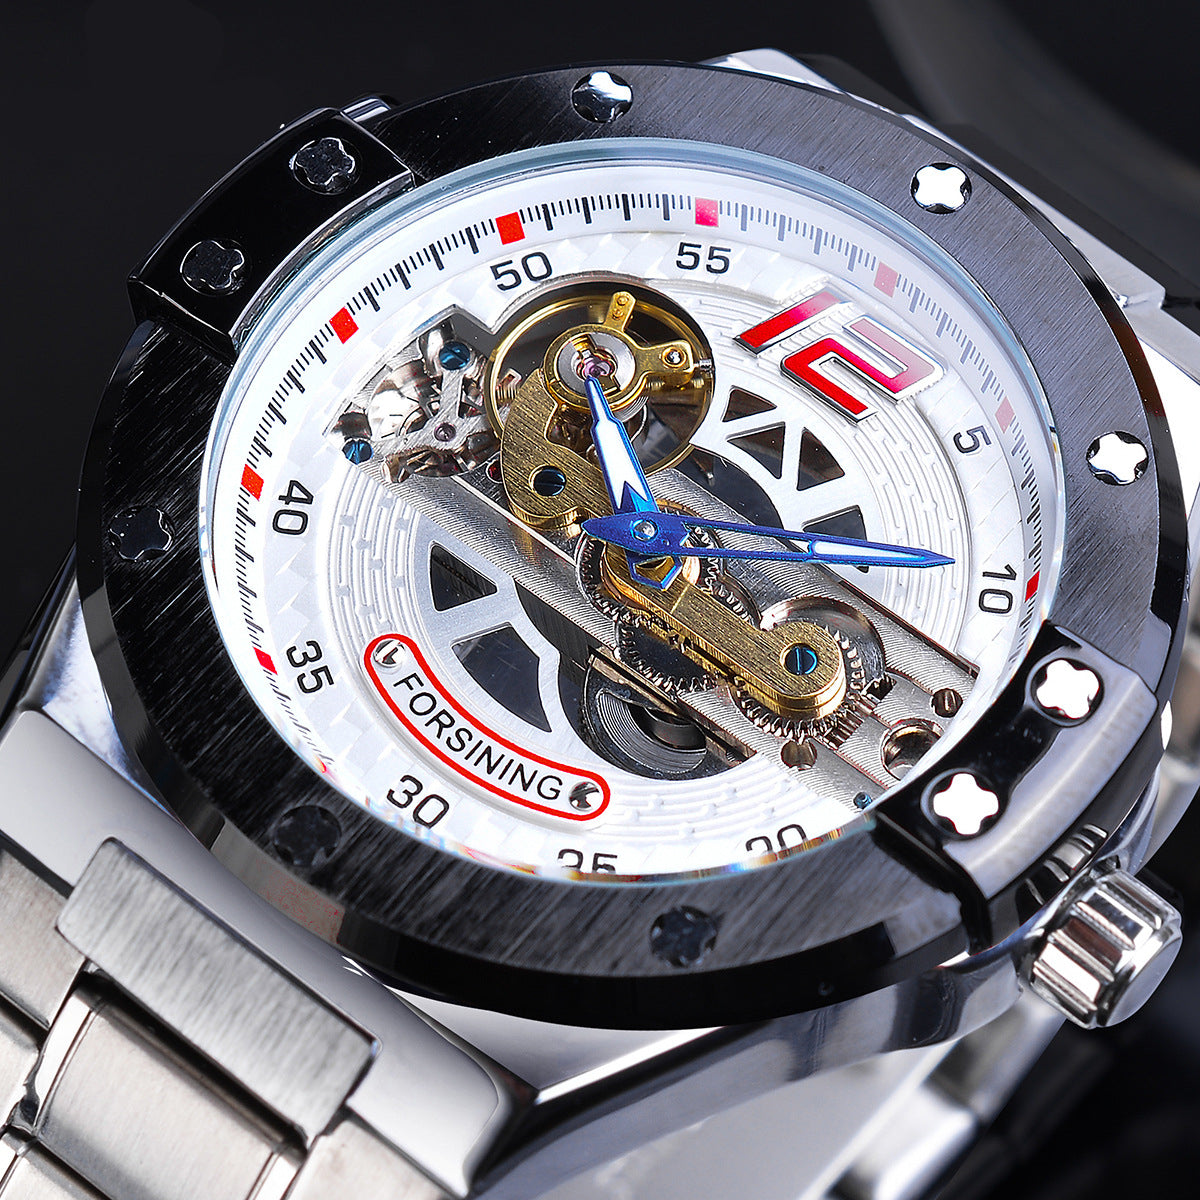 American Fashion Automatic Mechanical Watches For Men & Women